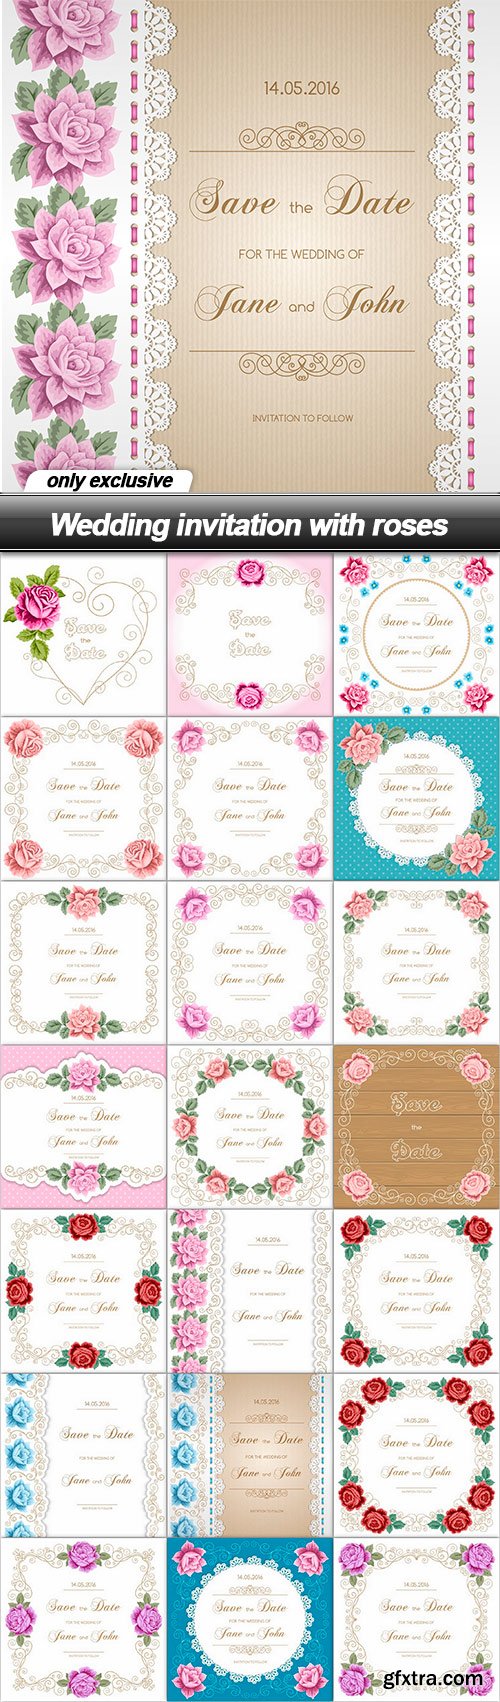 Wedding invitation with roses - 22 EPS